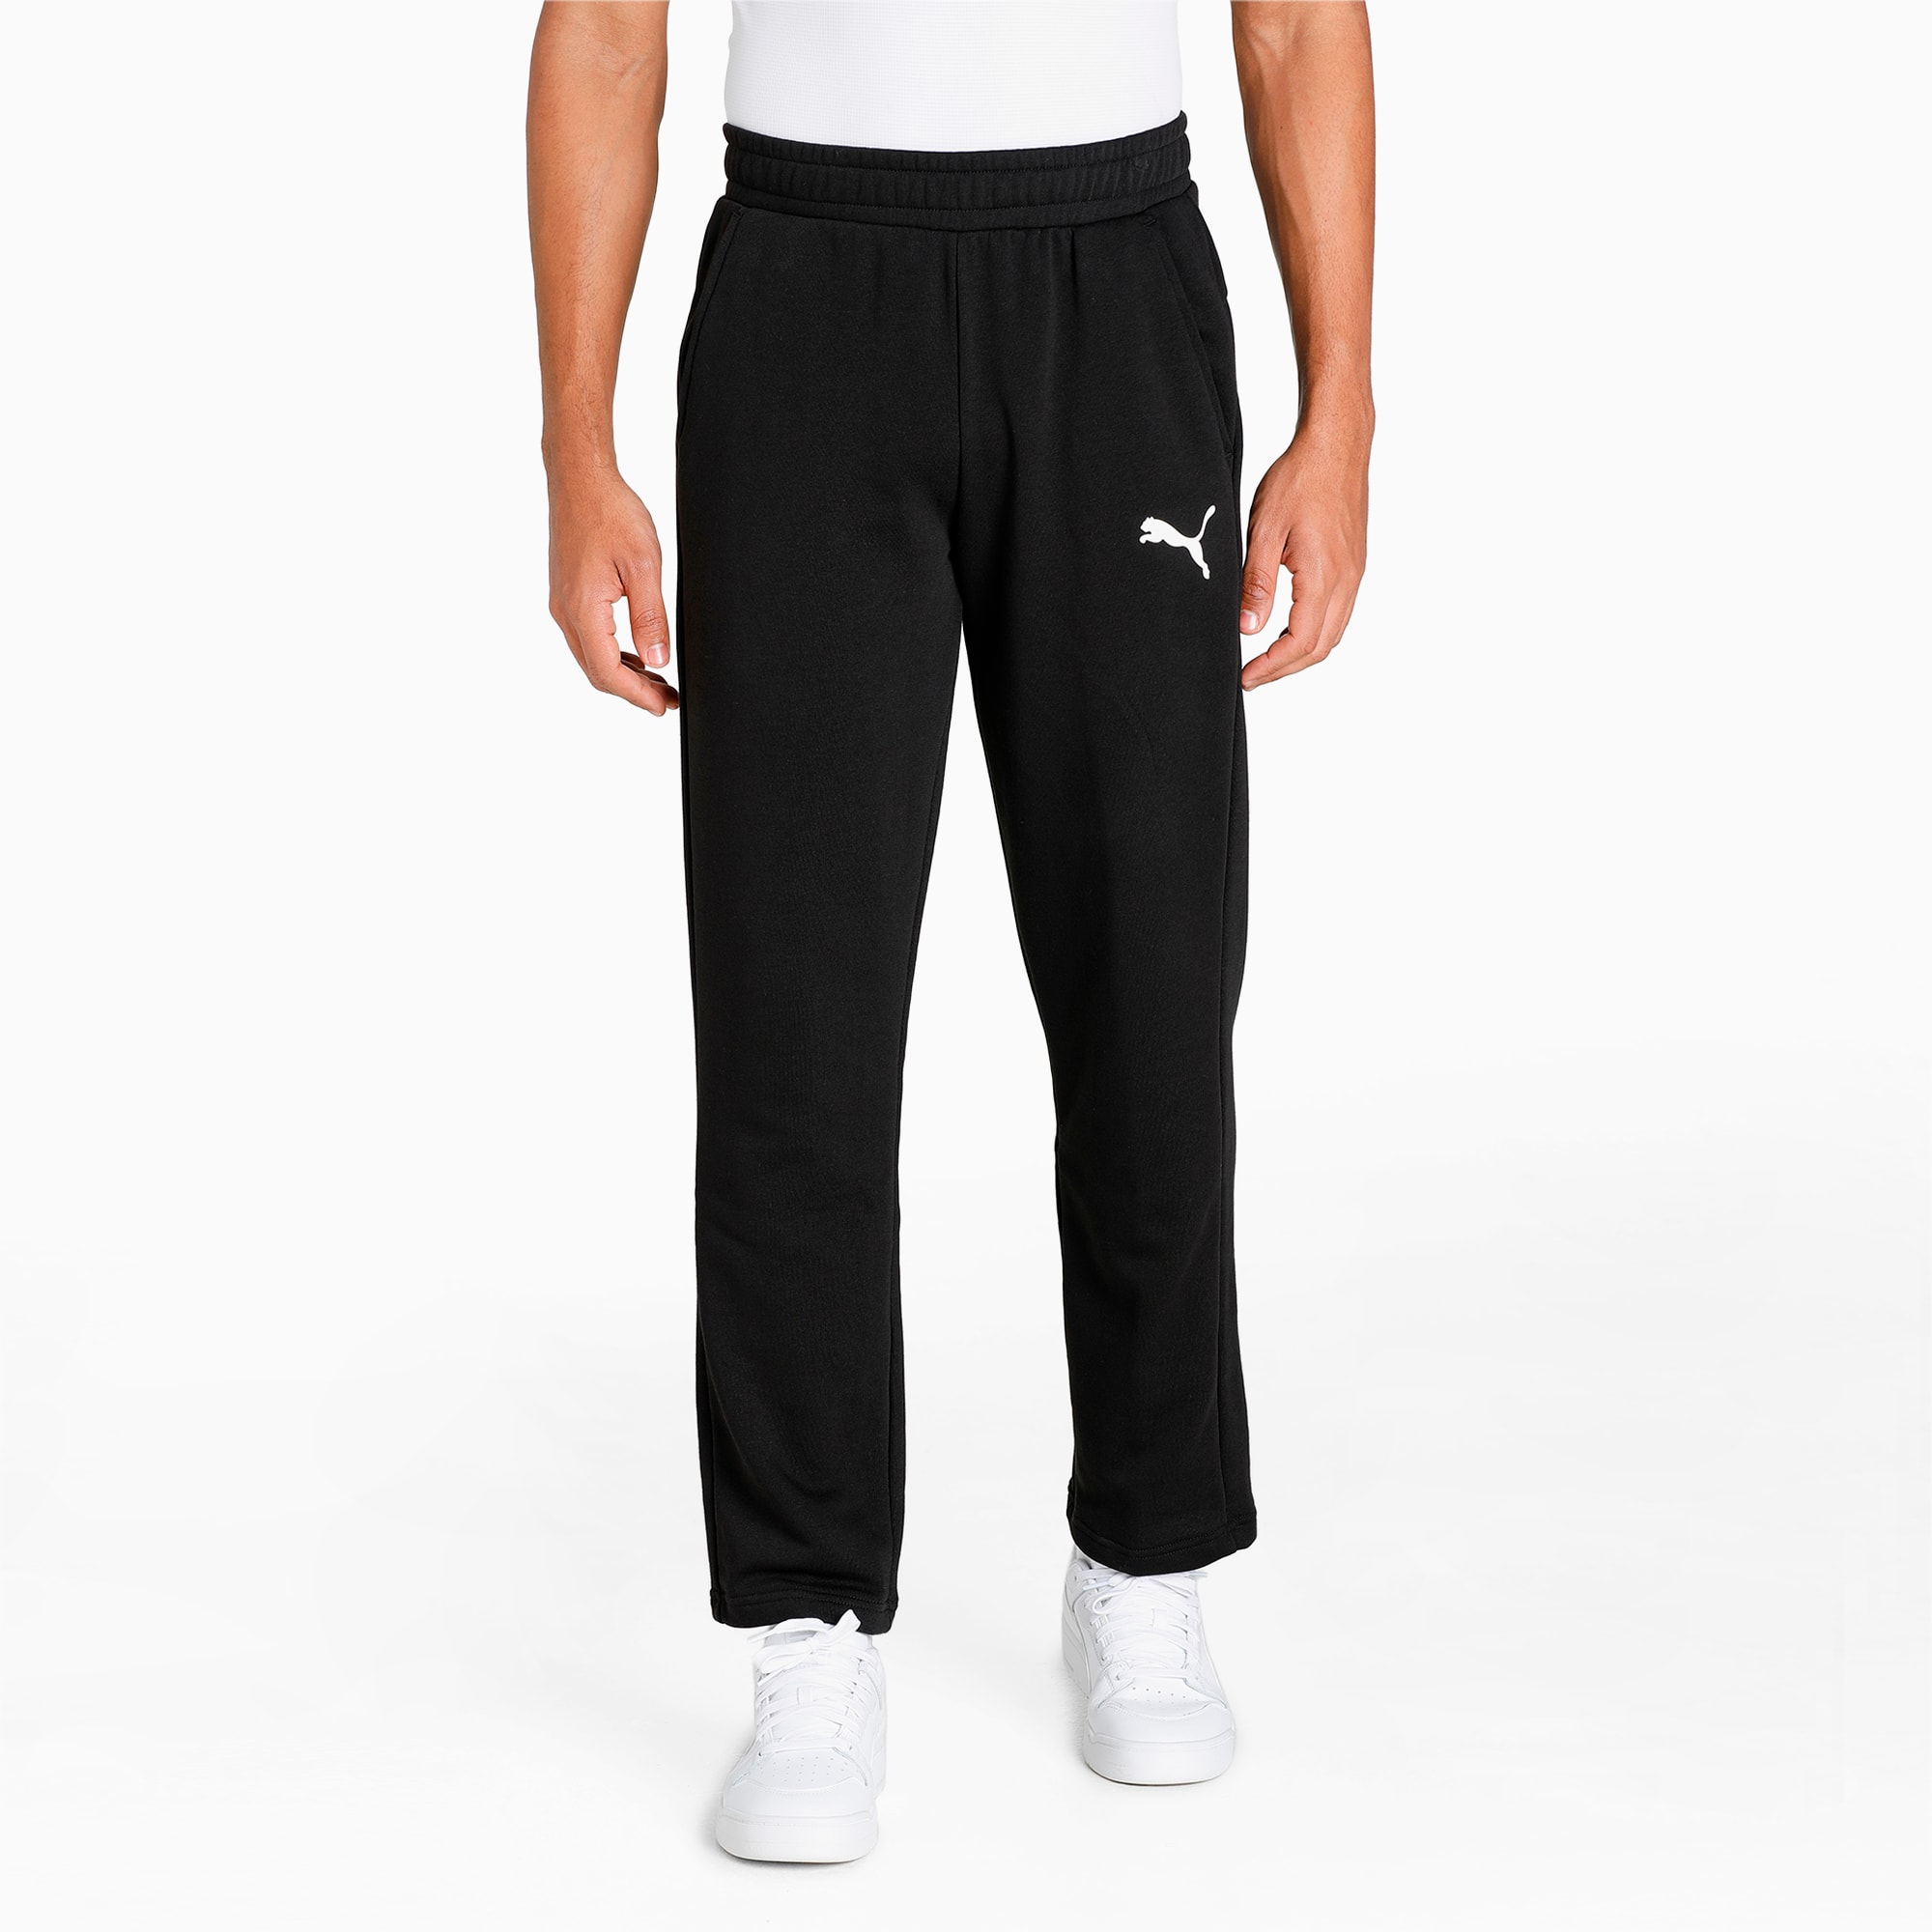 PUMA Essentials Logo Men's Sweatpants, Black, Size S, Clothing